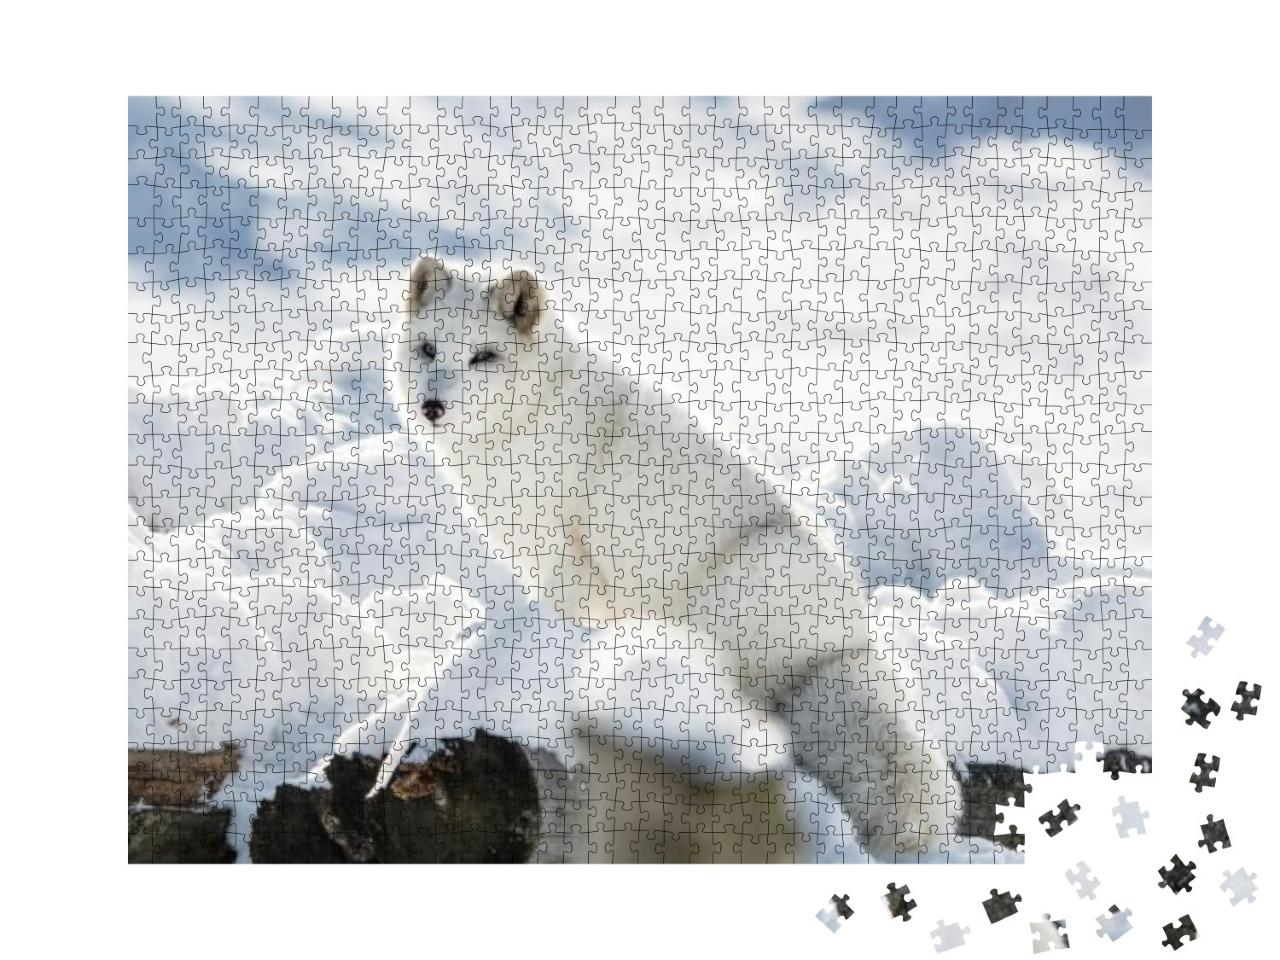 Puzzle 1000 Teile „Polarfuchs auf einem Hügel im Omega Park, Quebec, Kanada“